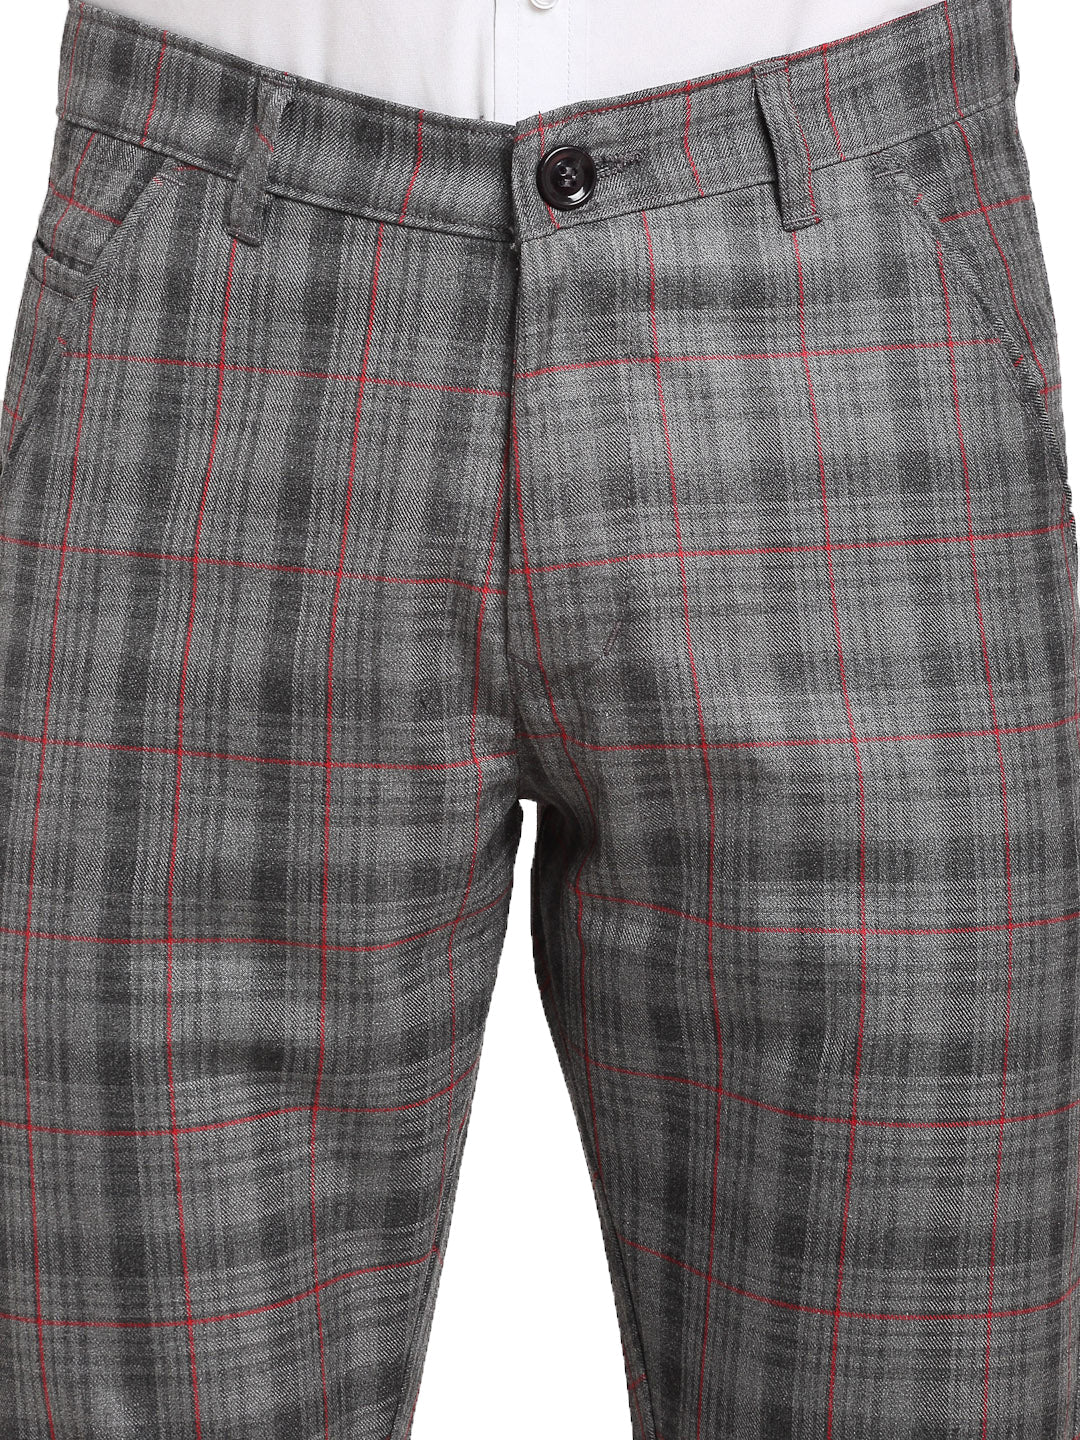 Men's Grey Cotton Checked Formal Trousers ( FGP 267Grey ) - Jainish